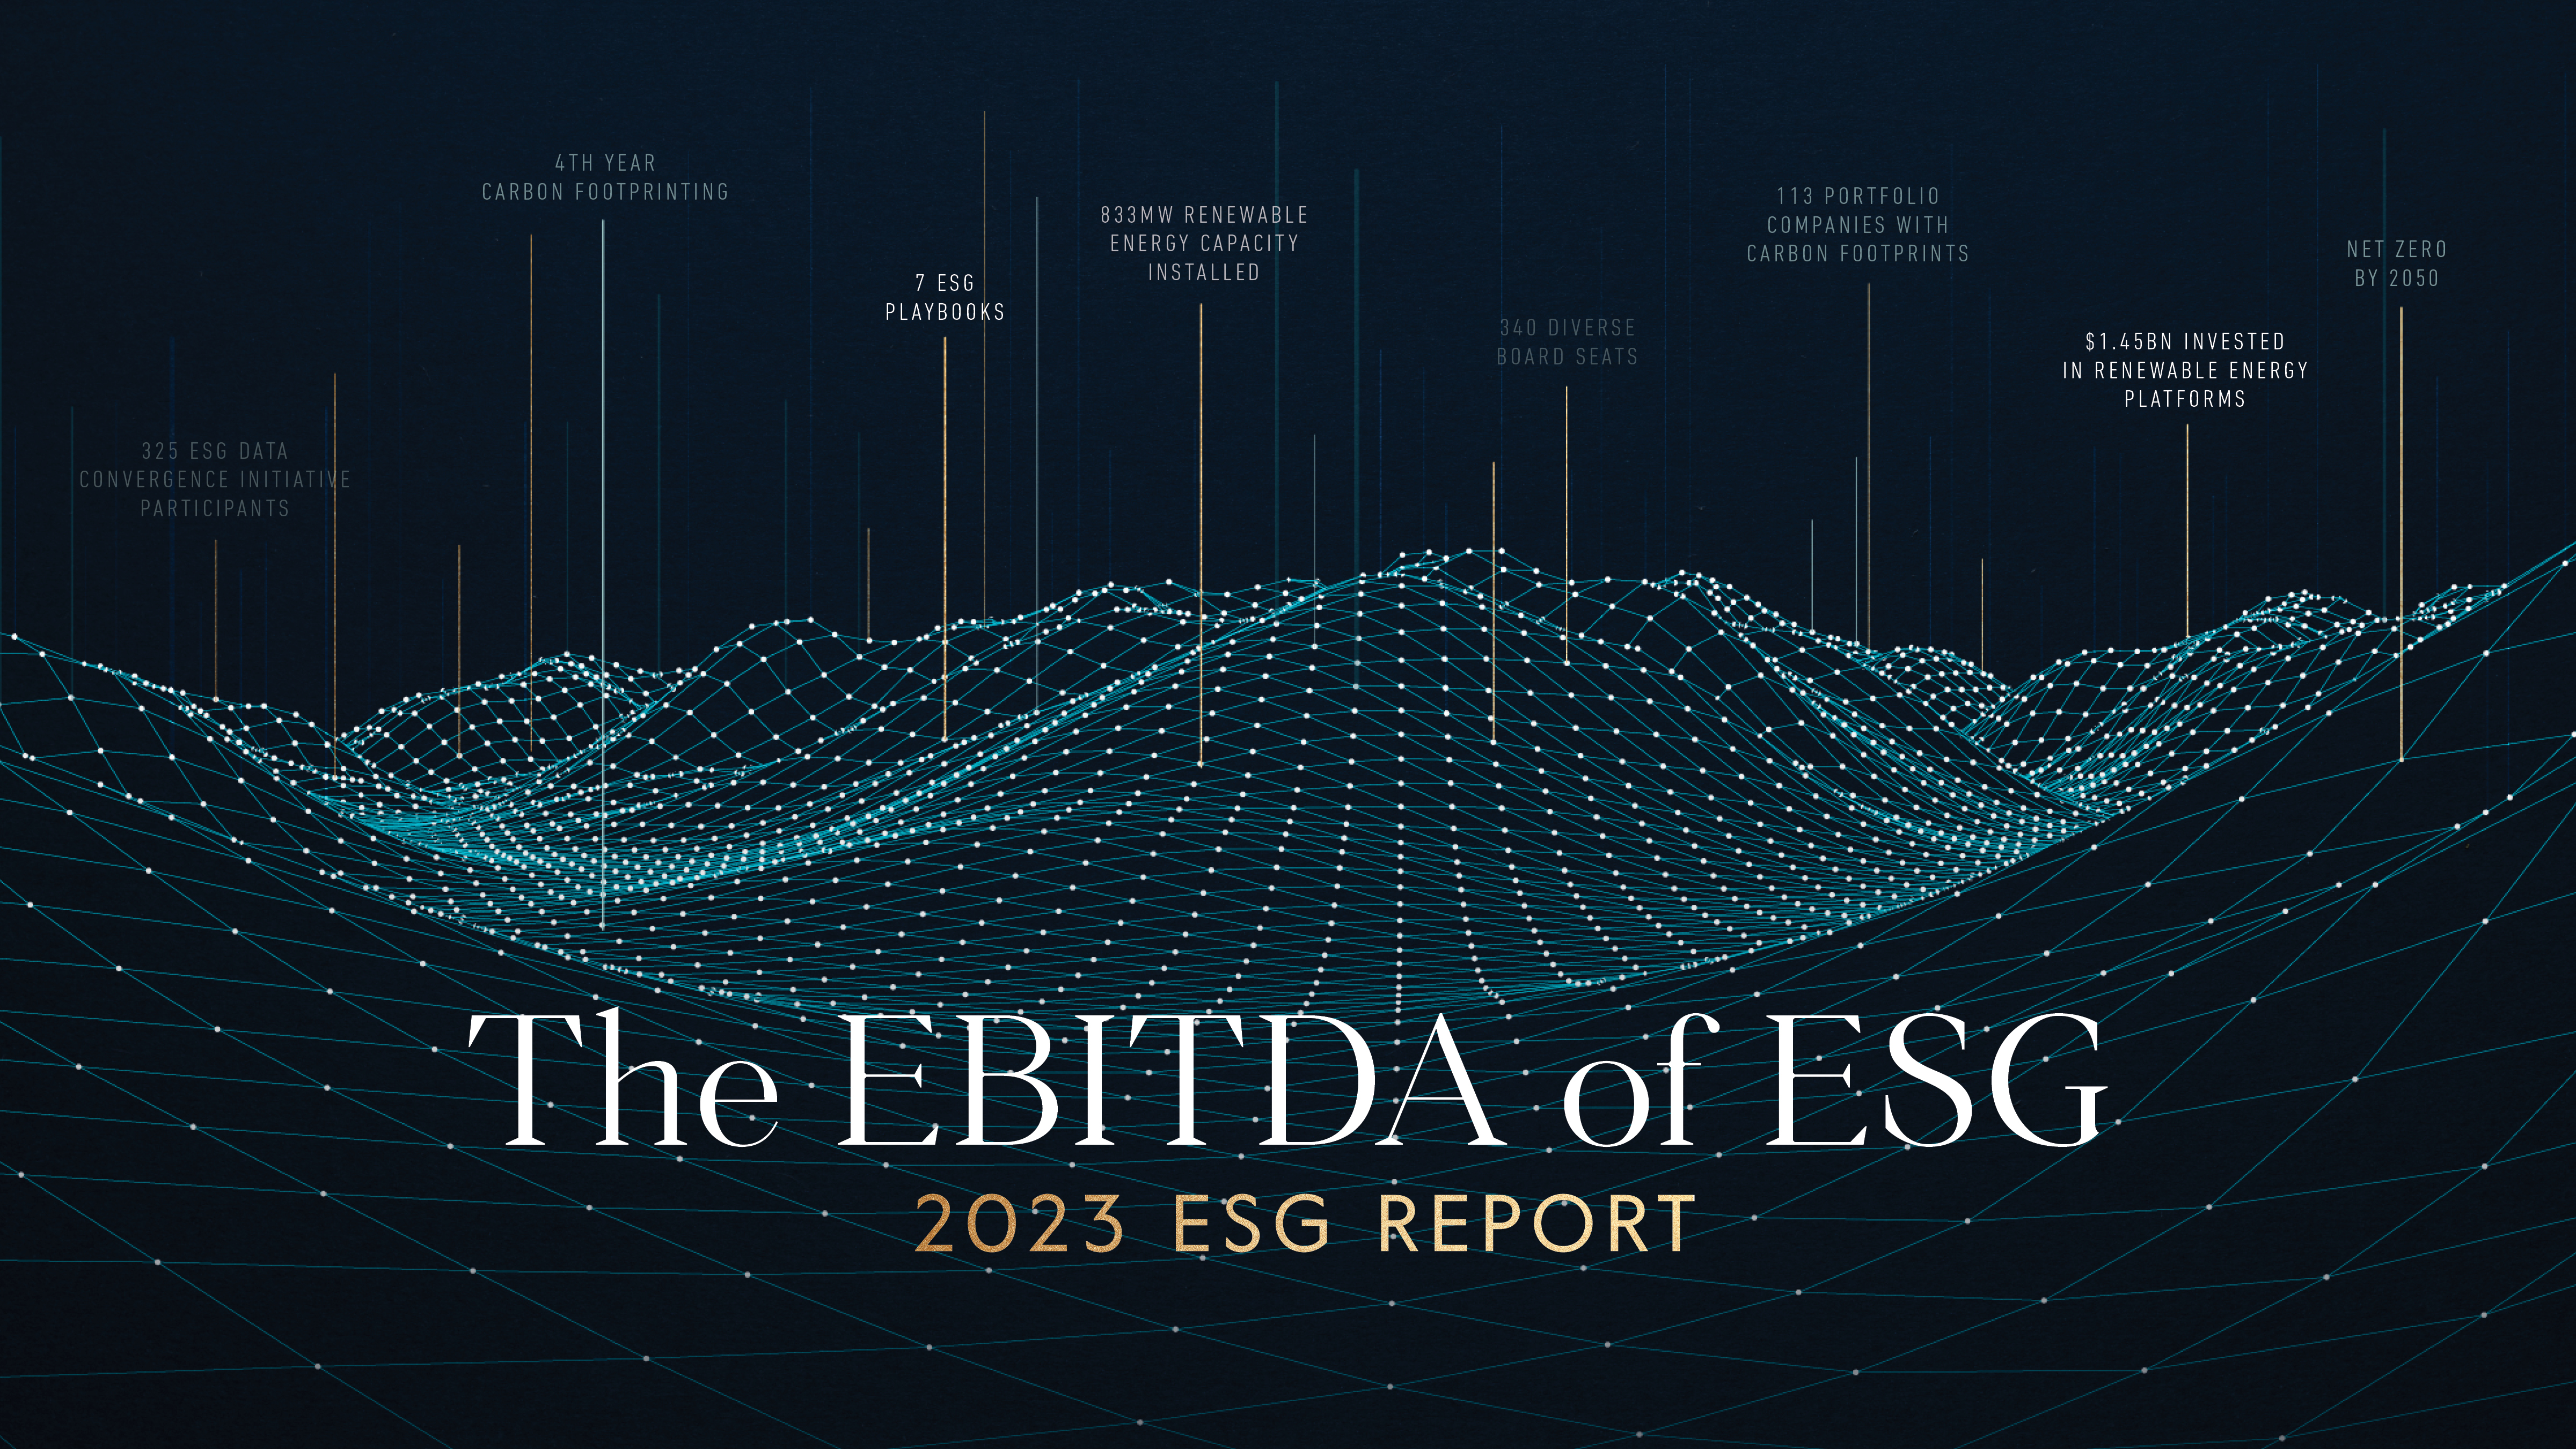 The EBITDA of ESG